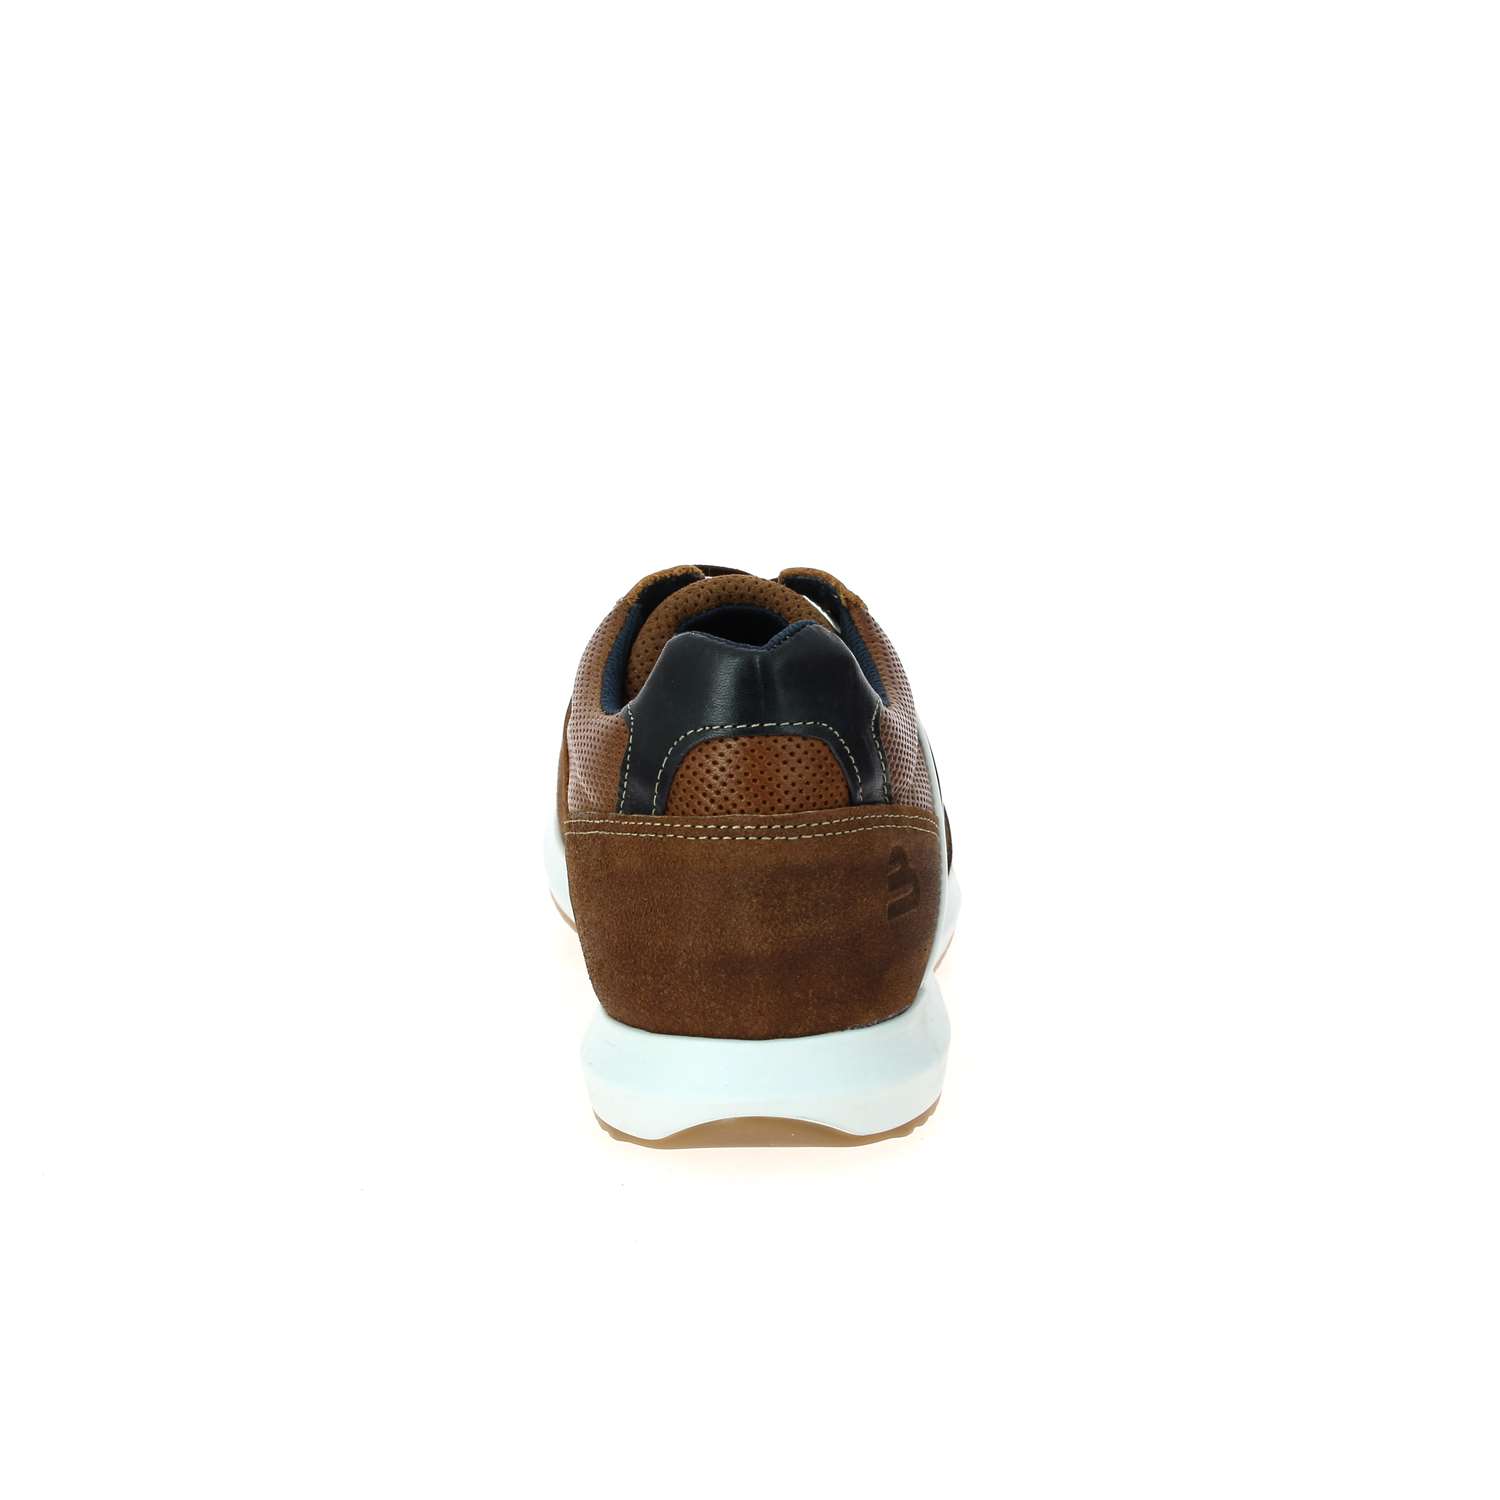 04 - BULLSTRIPE - BULLBOXER - Chaussures à lacets - Cuir